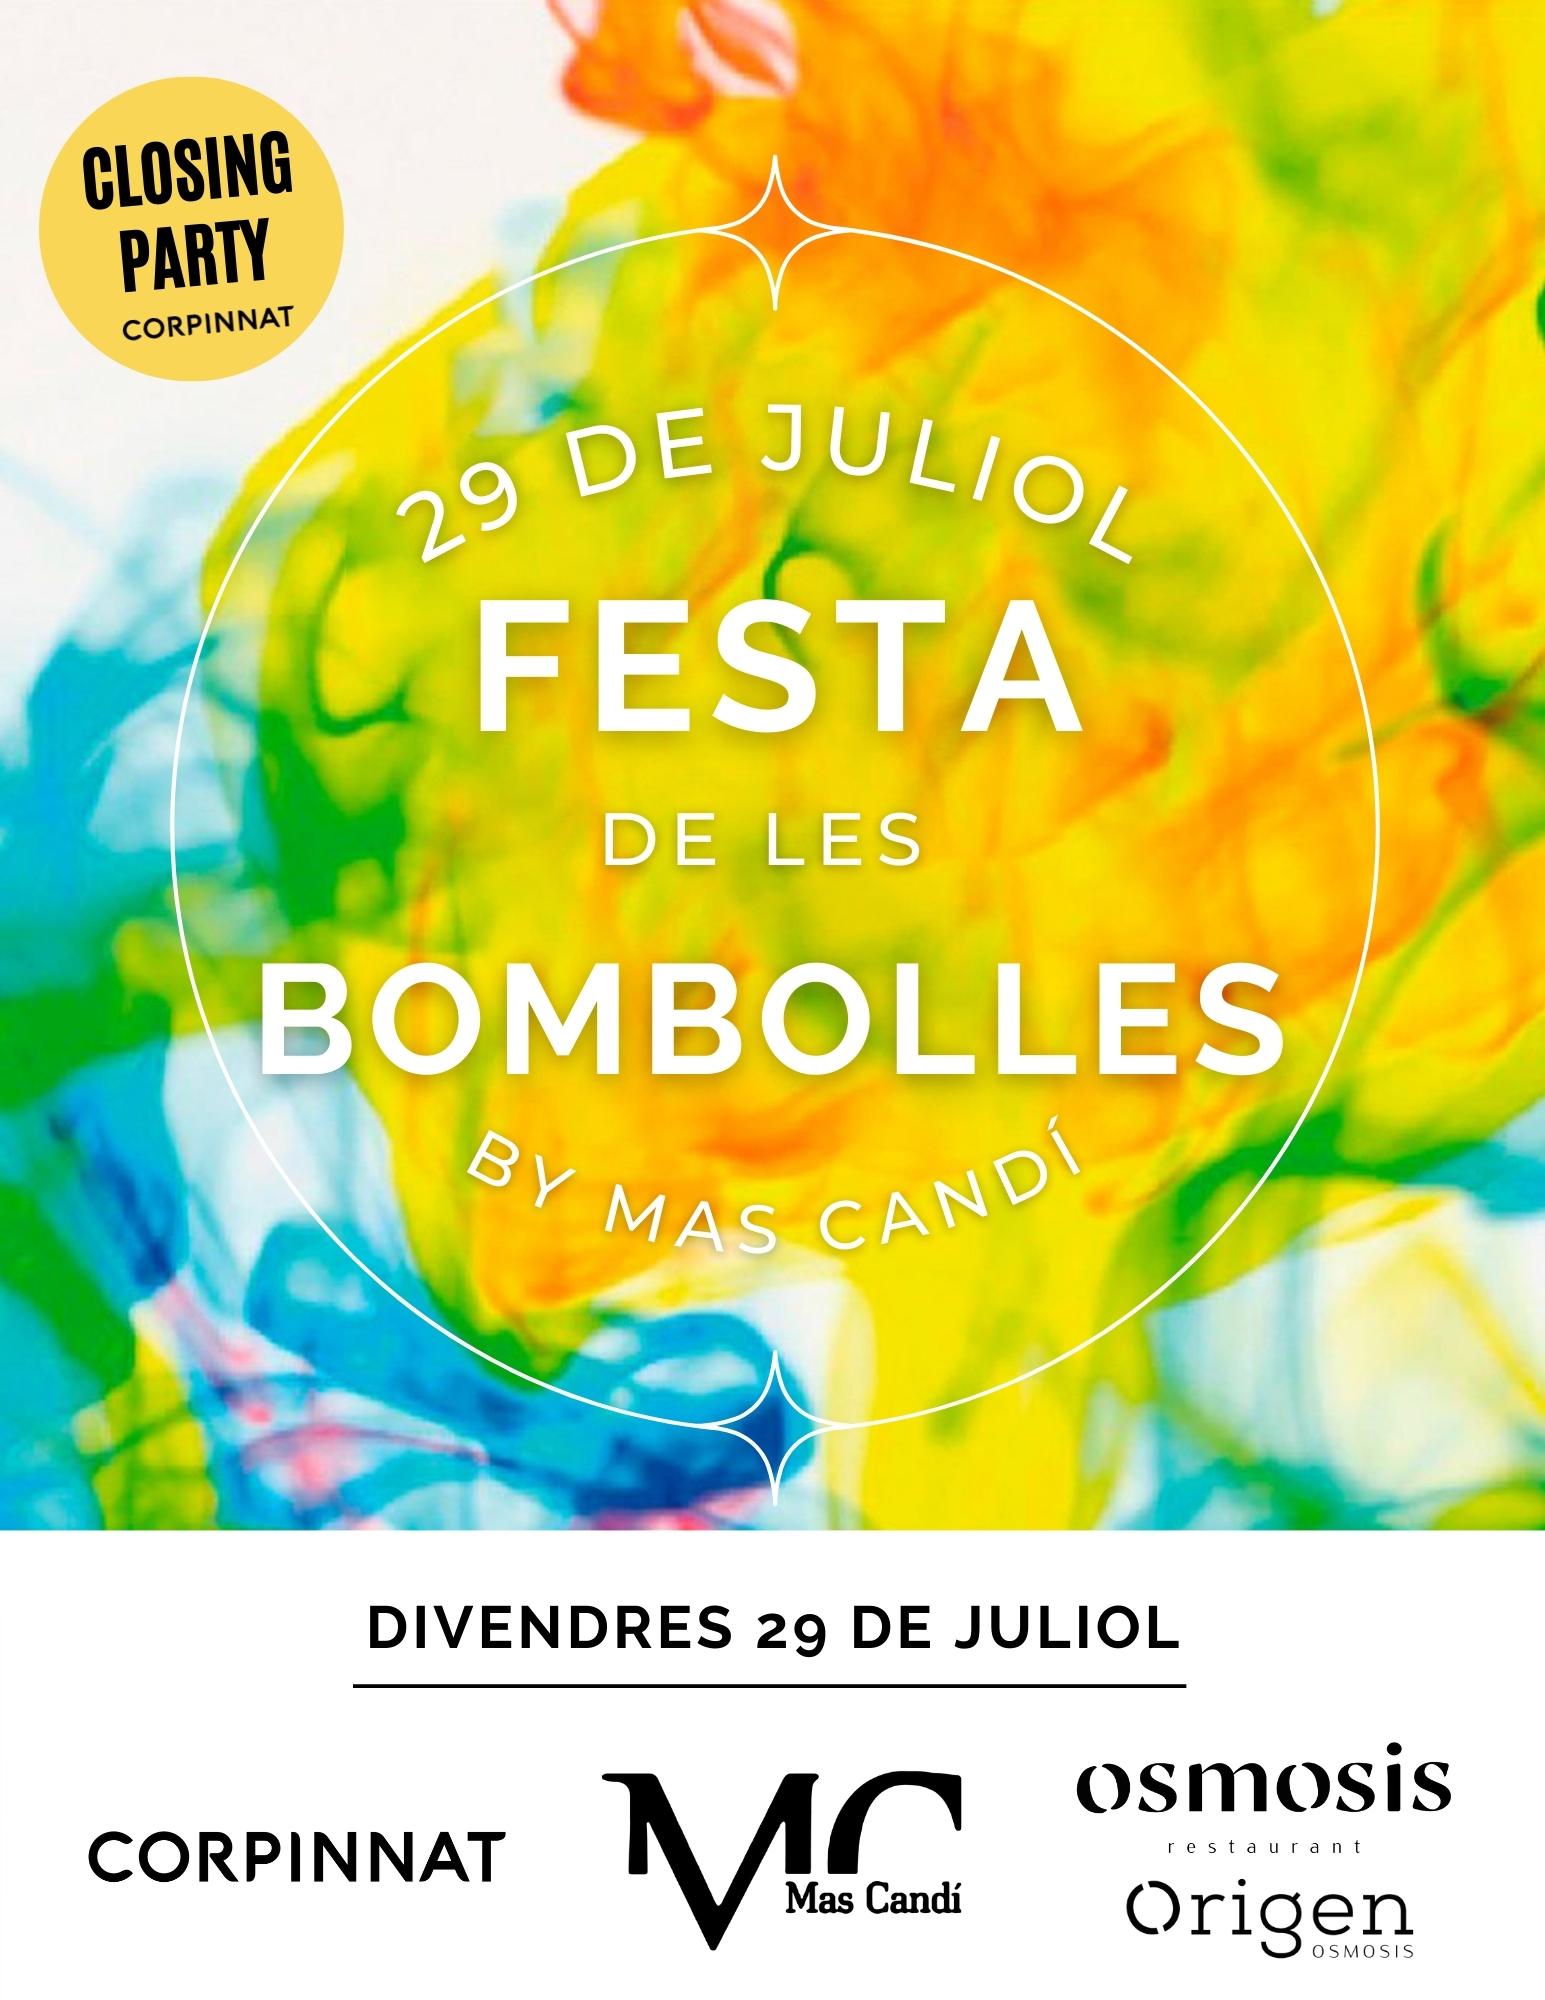 Festa de les Bombolles by Mas Candí Corpinnat & Osmosis